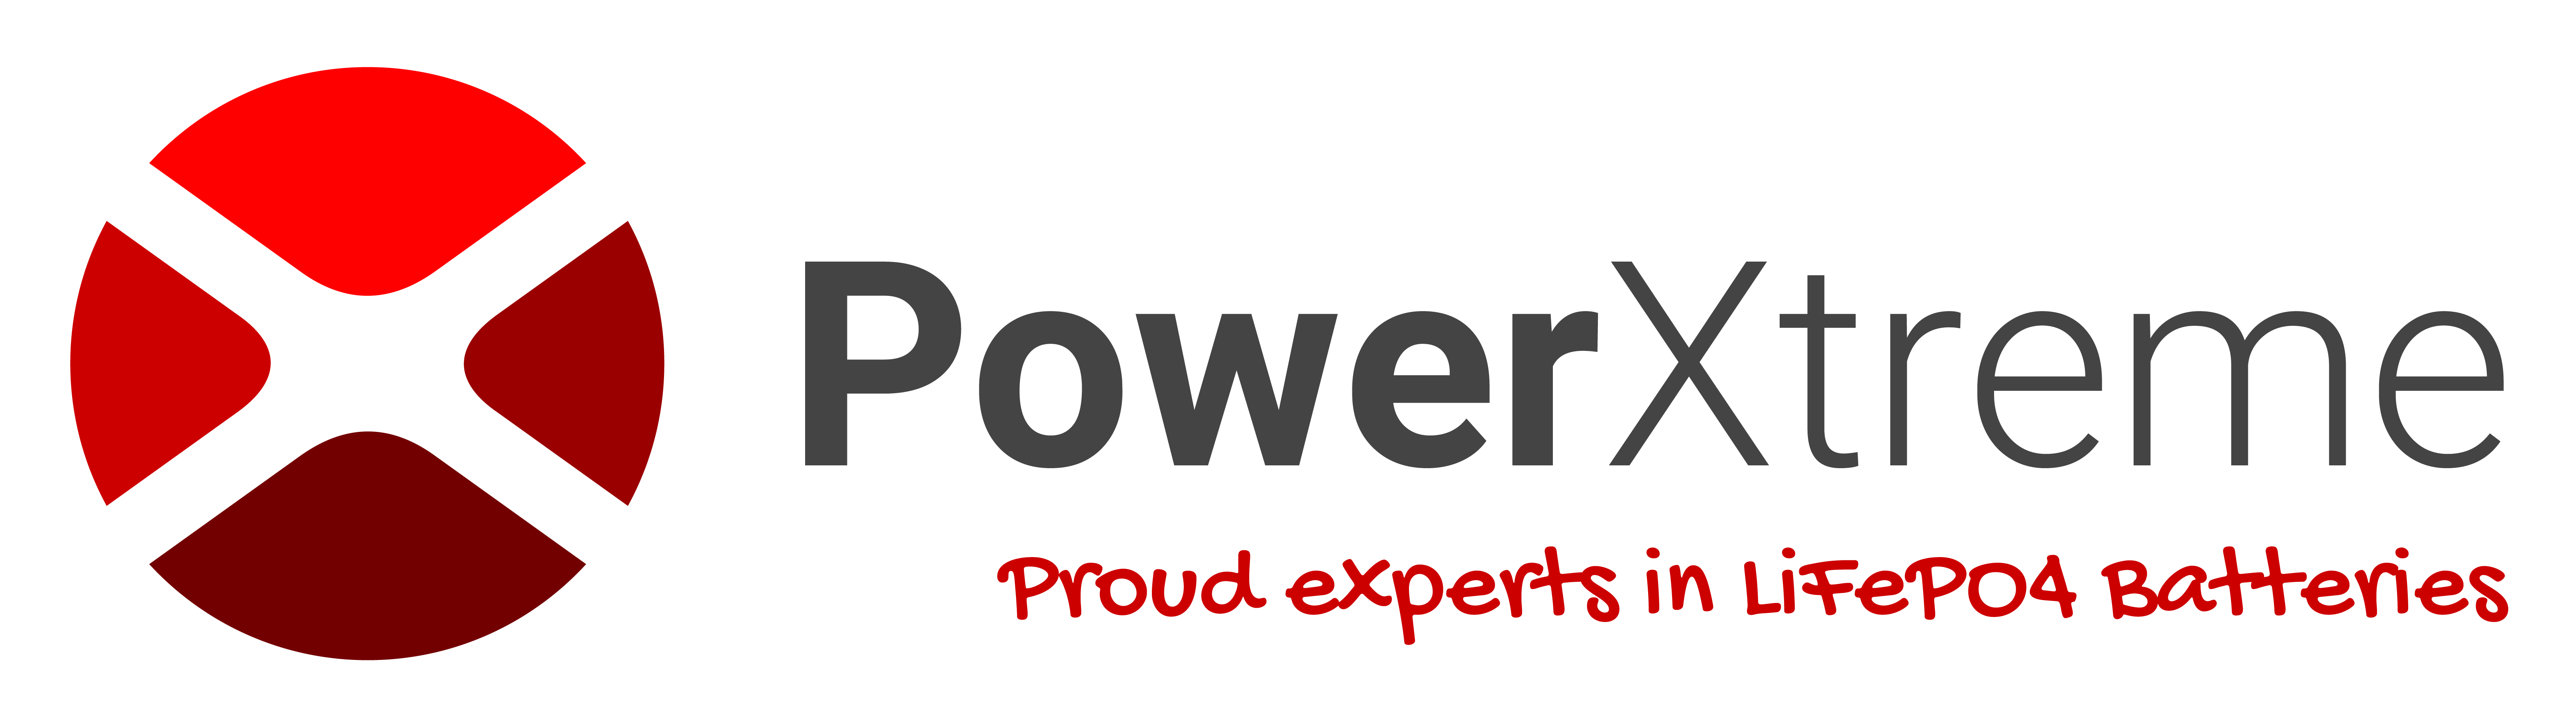 EmergoPlus B.V. (PowerXtreme)